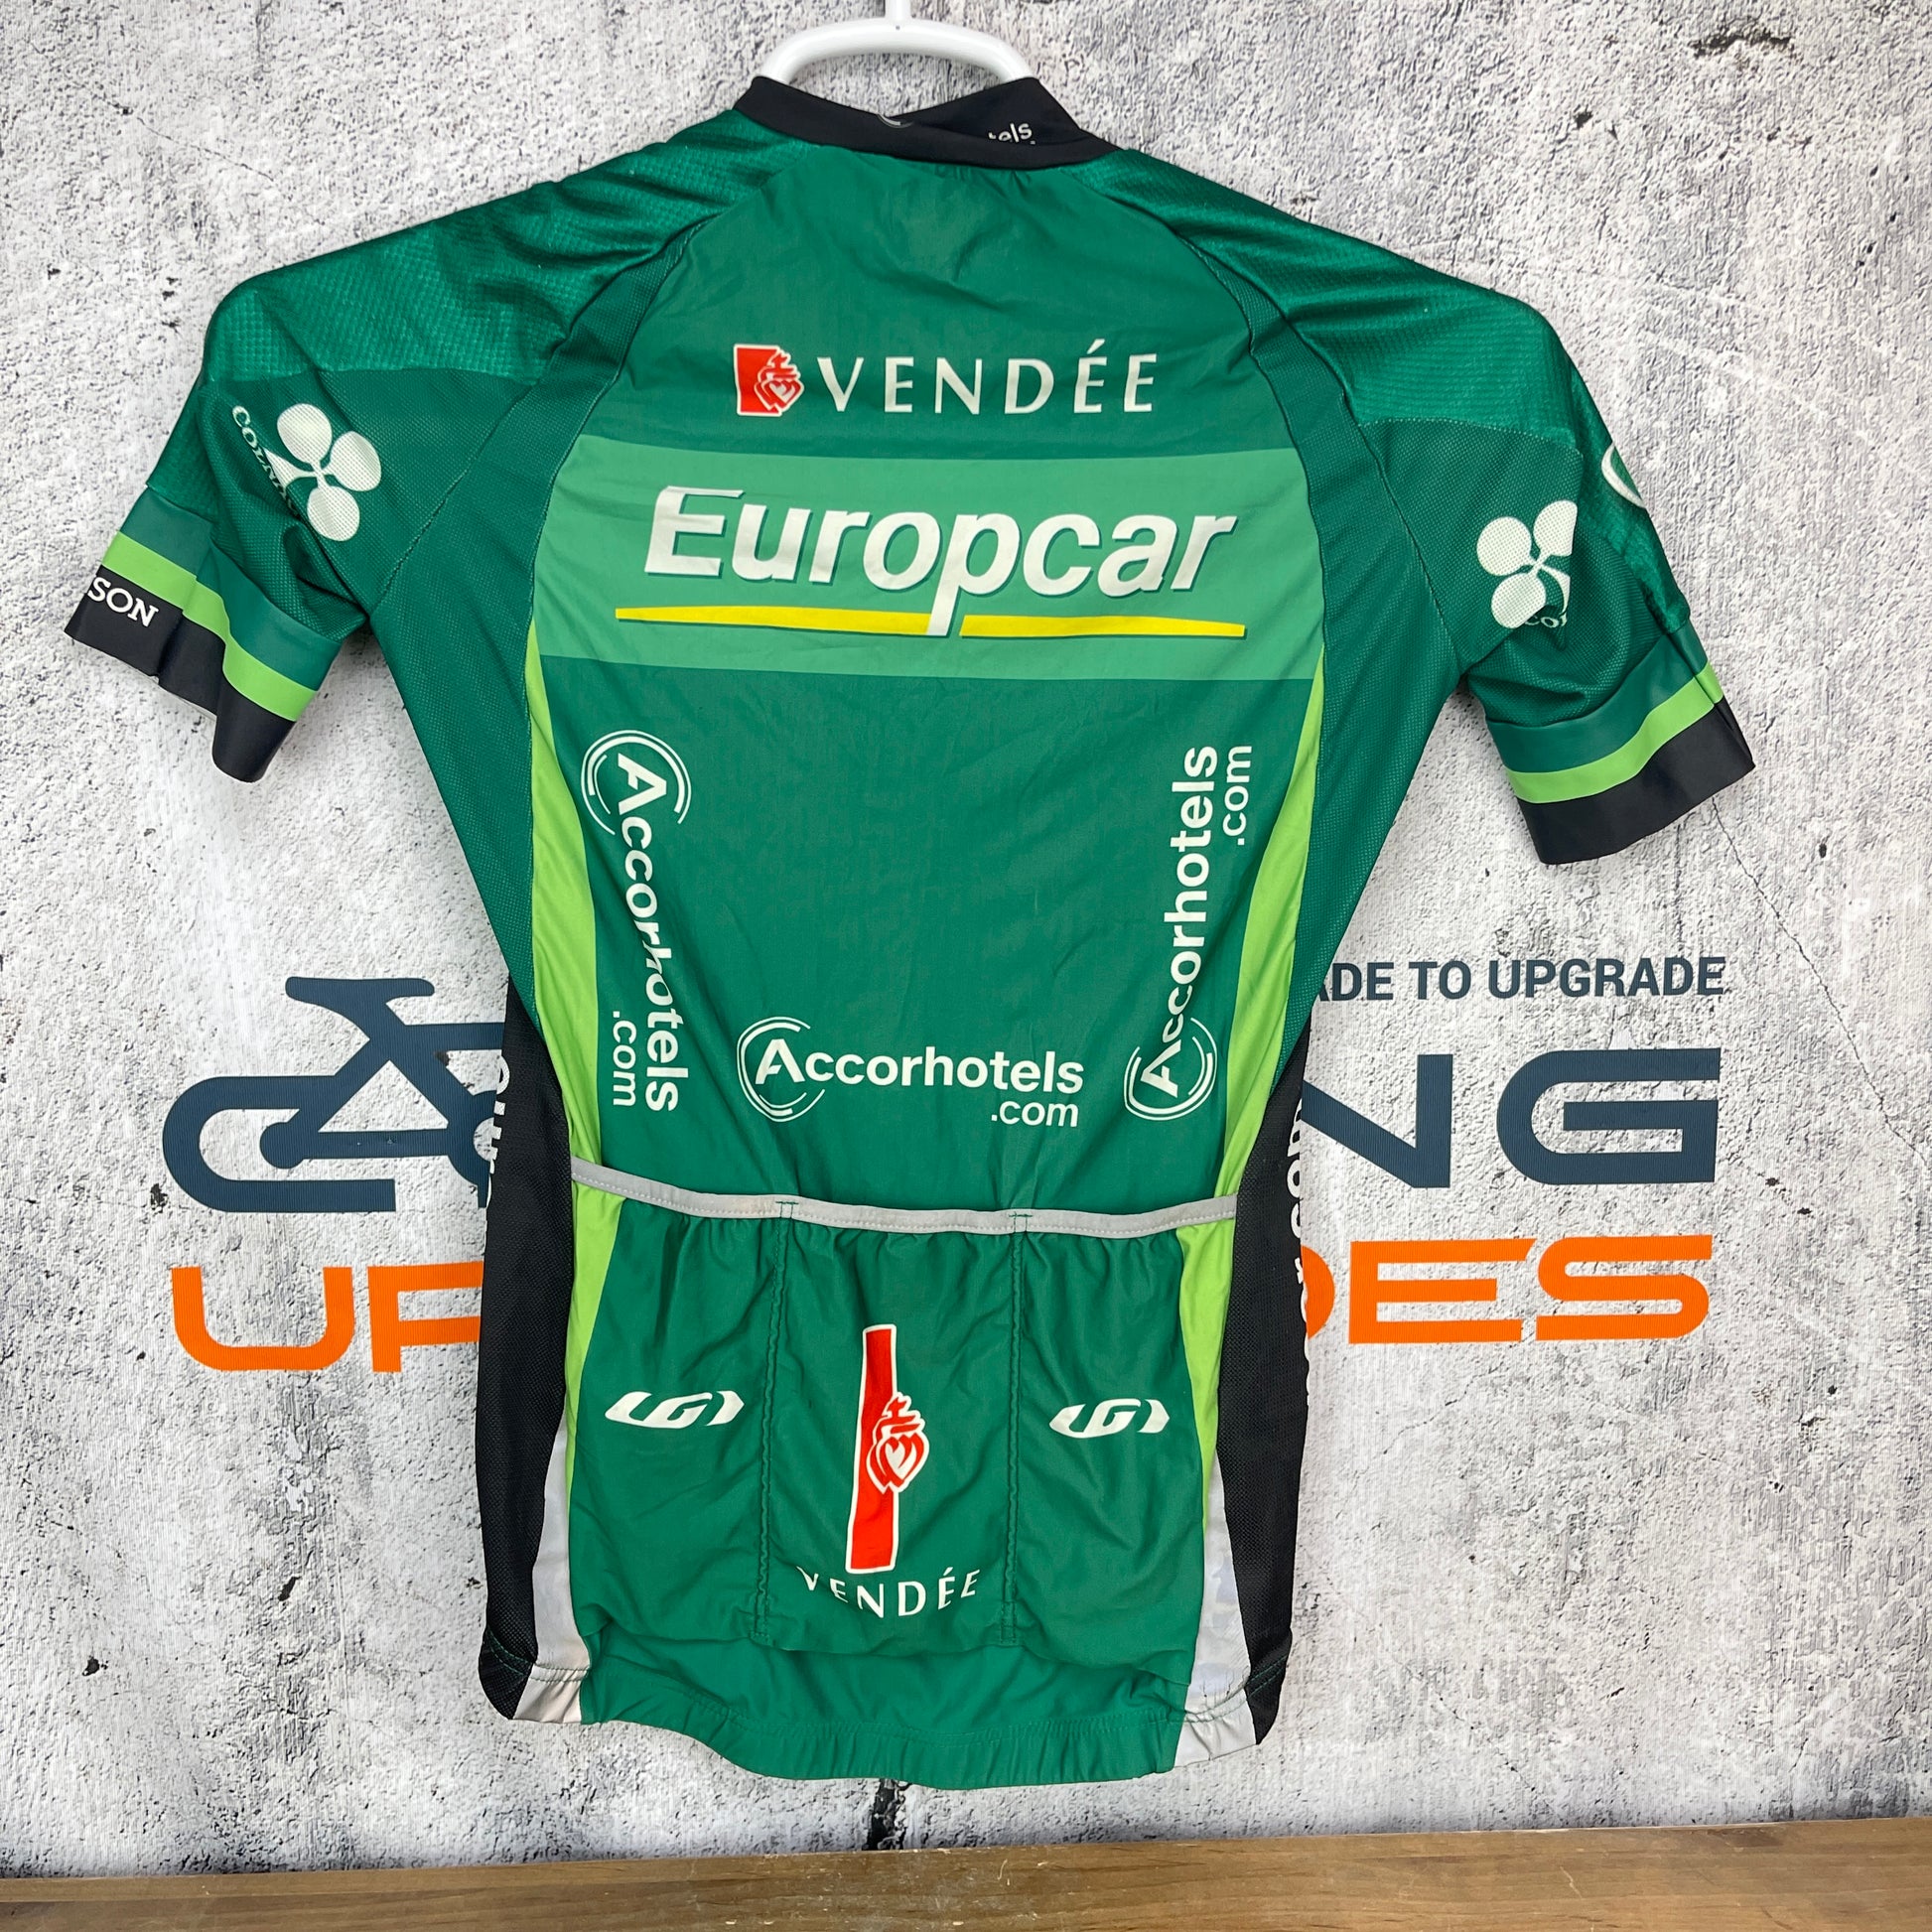 Louis Garneau Europcar Vendee Medium Men's Green Cycling Jersey Short –